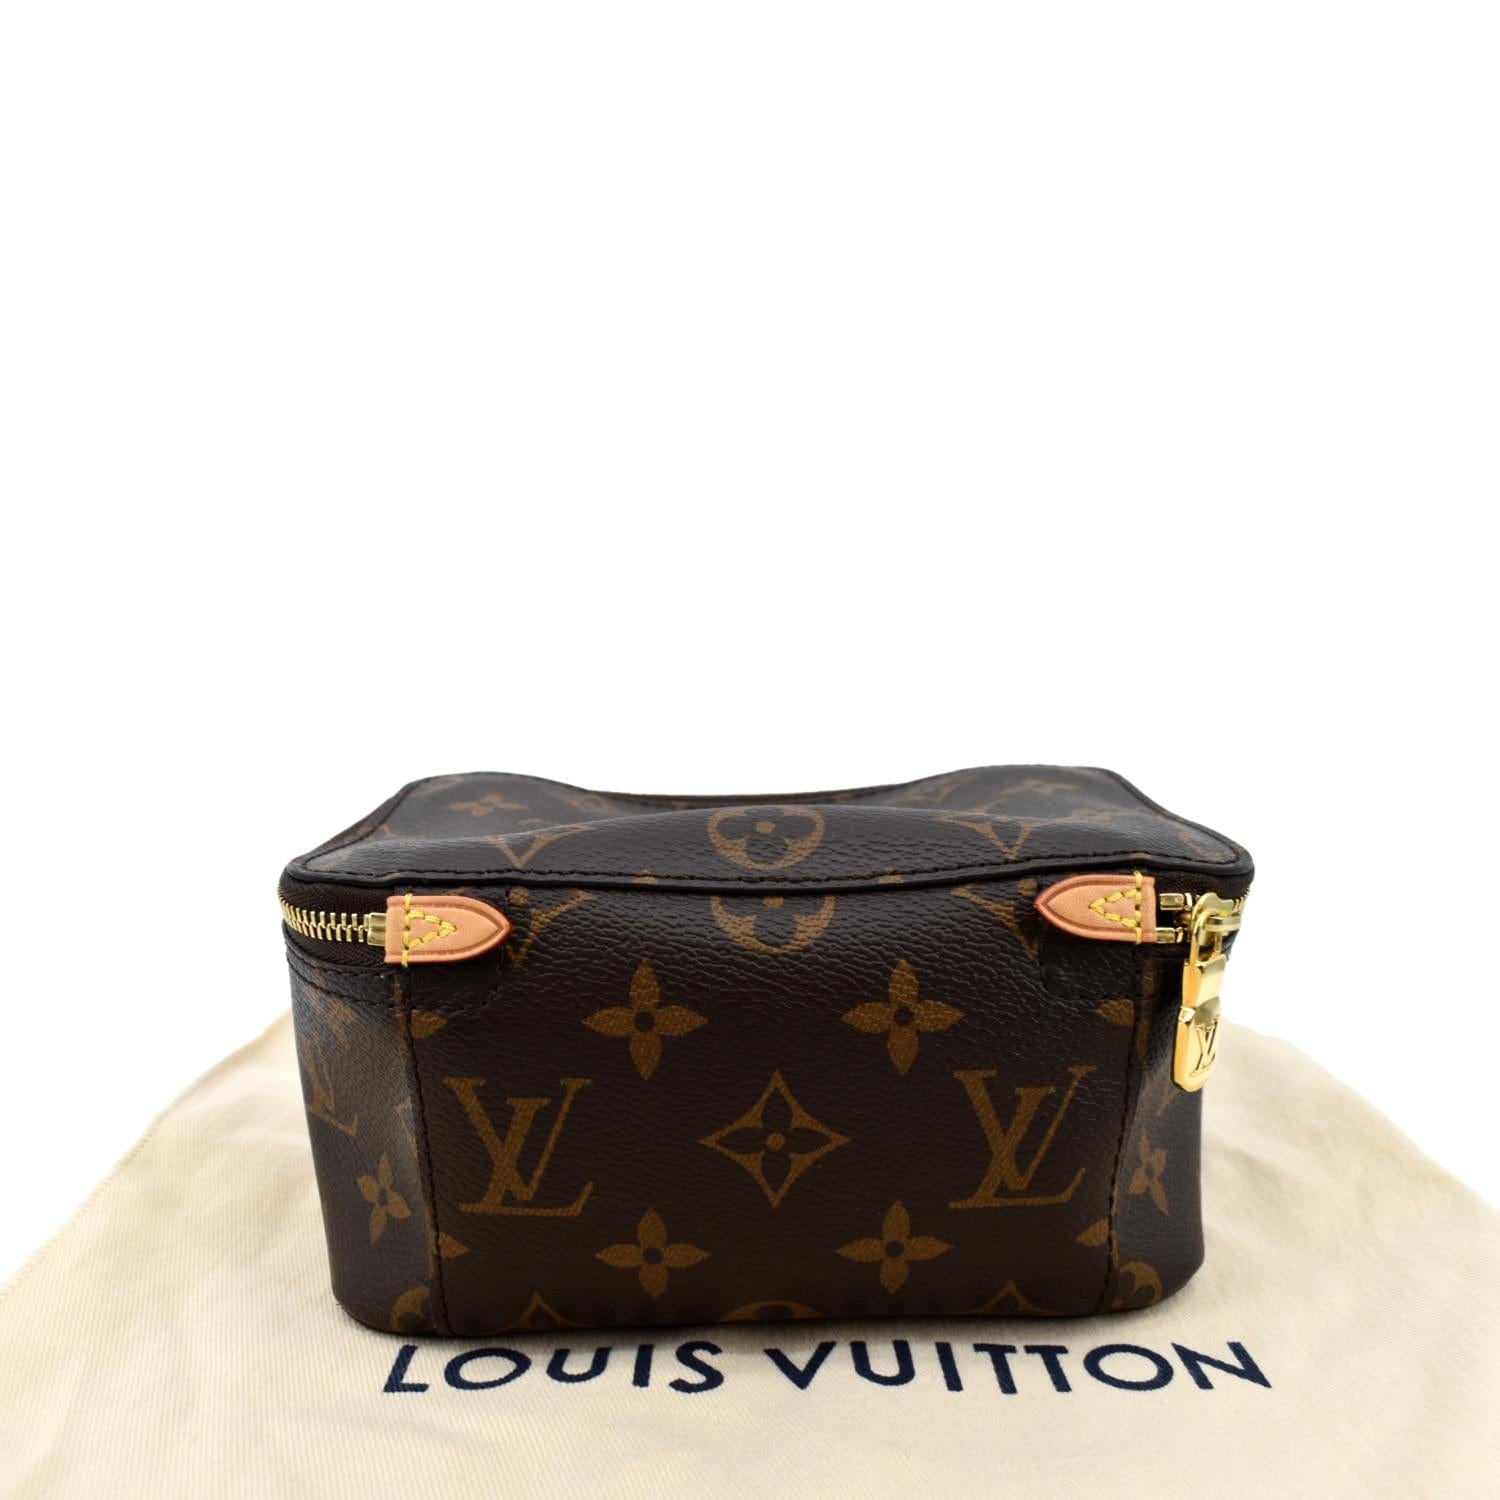 Louis Vuitton New Packaging - Louis Vuitton Gets Rid of Brown Packaging